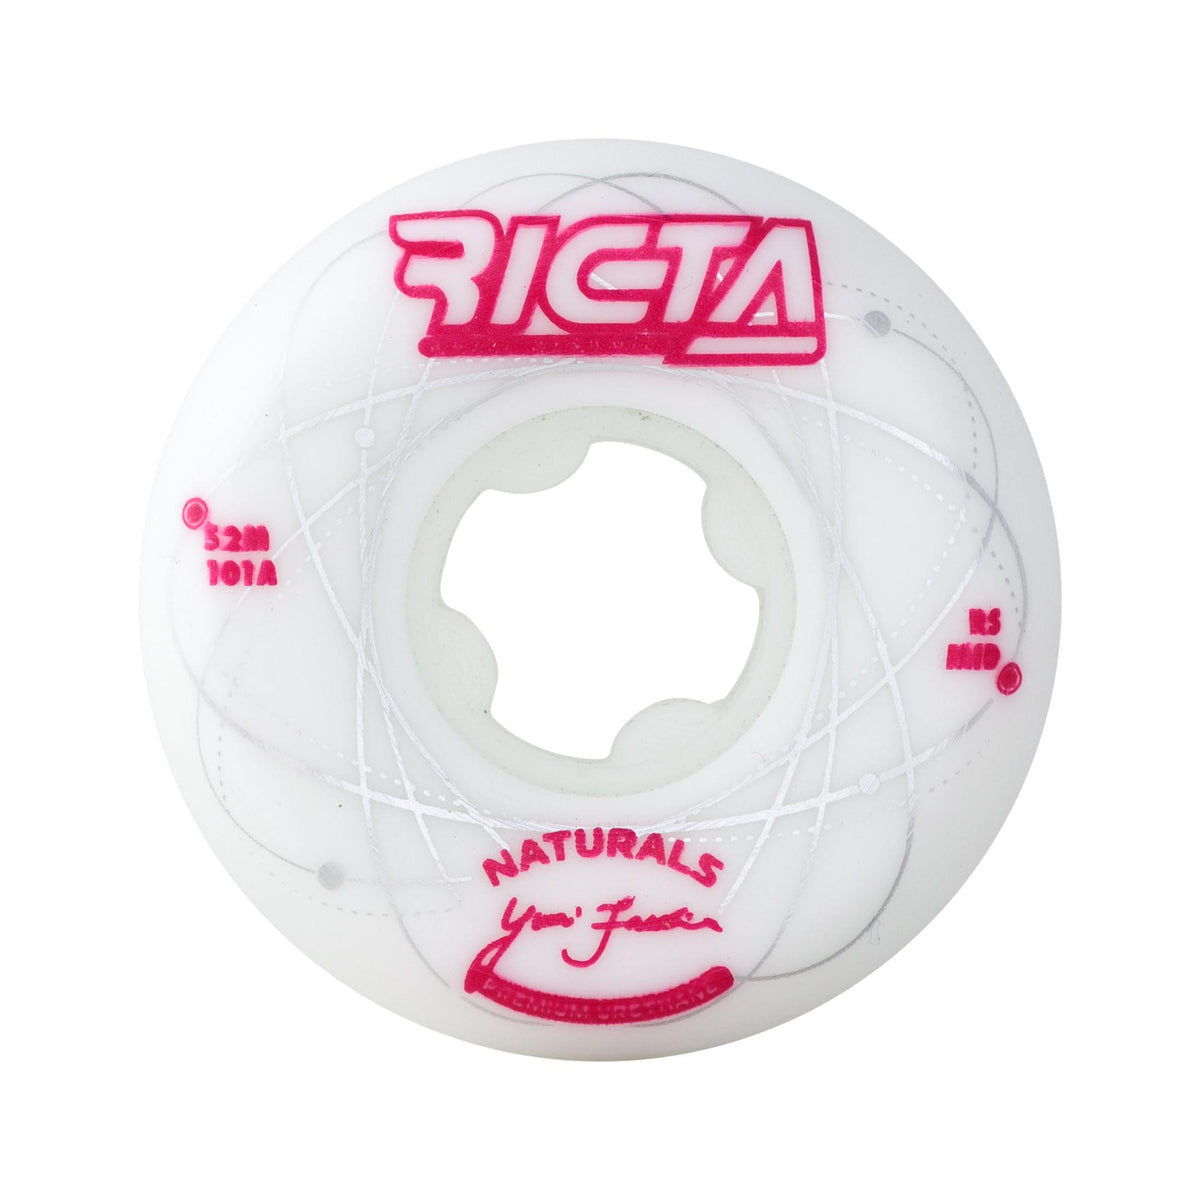 Ricta Facchini Orbital Naturals 52mm 101a White/Metallic Red Wheels - Venue Skateboards